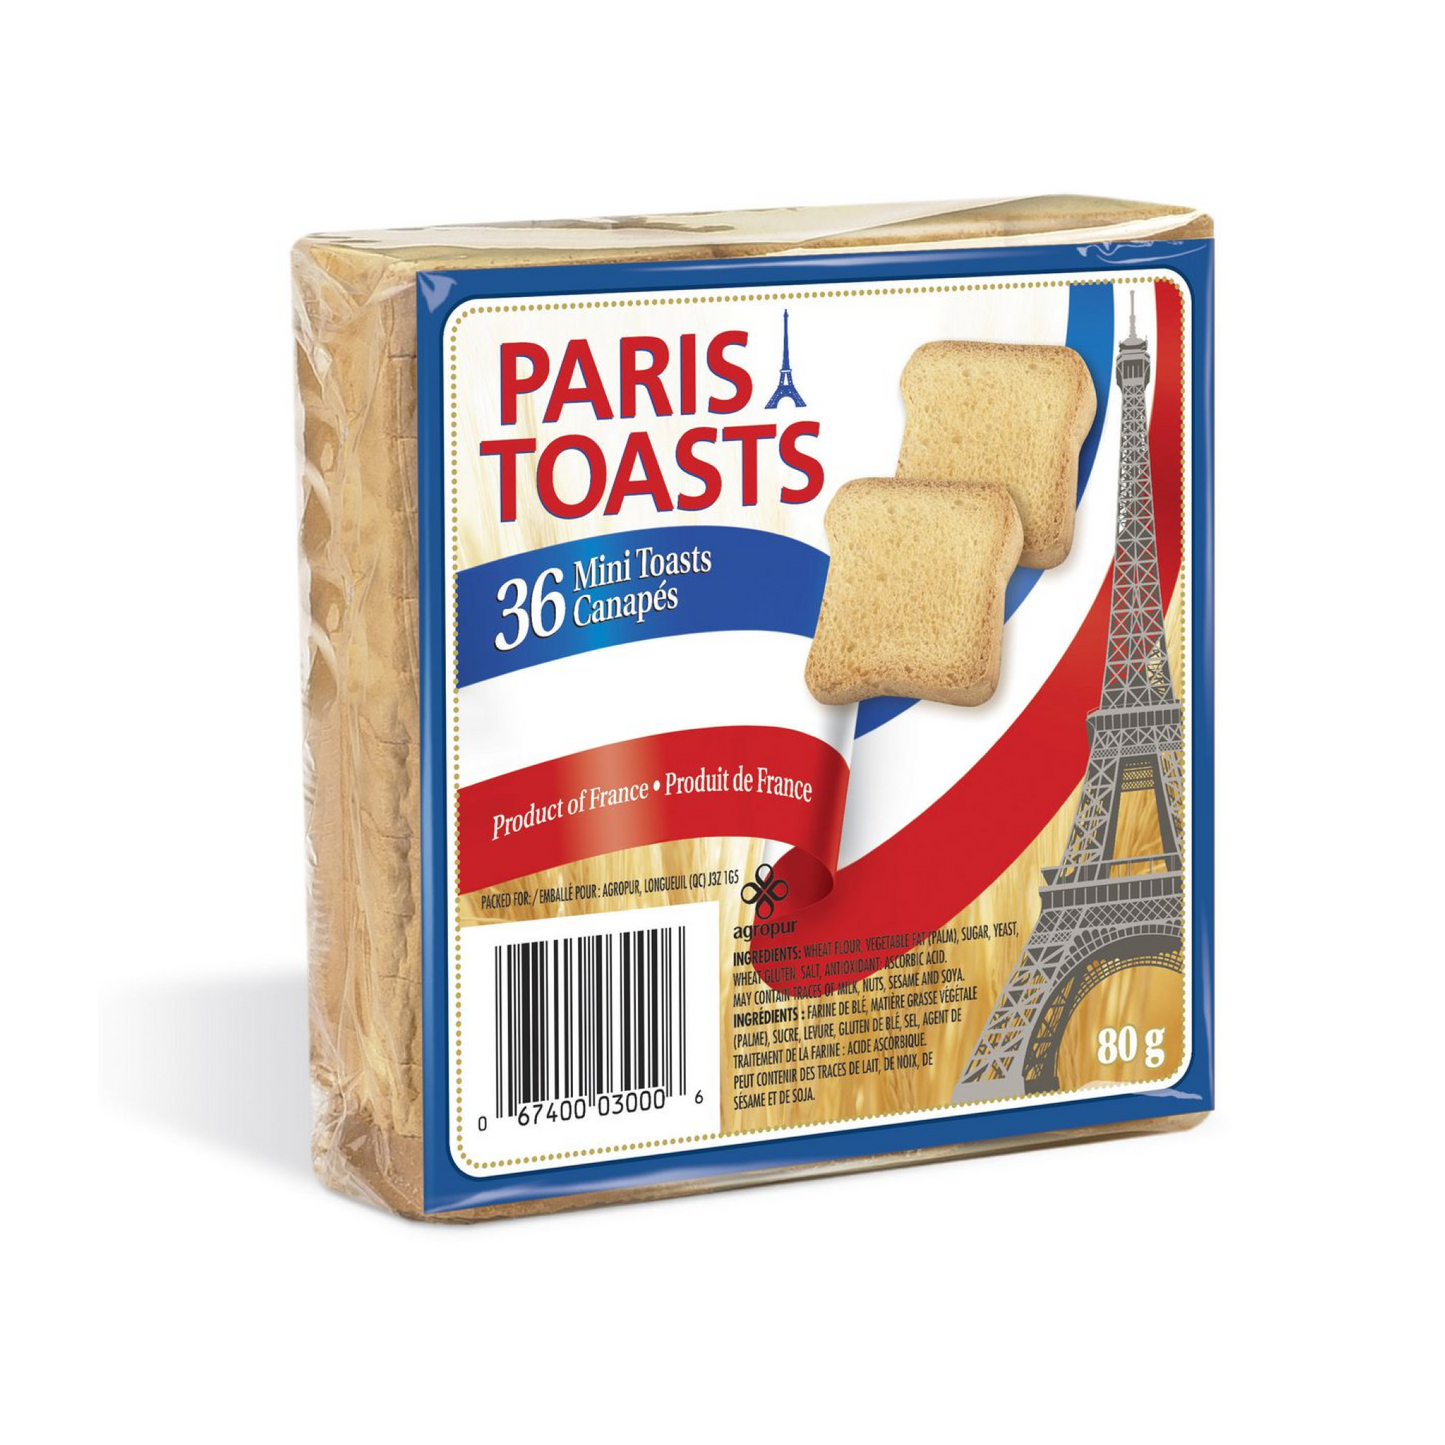 Paris Toasts 36 Mini Toasts 80g